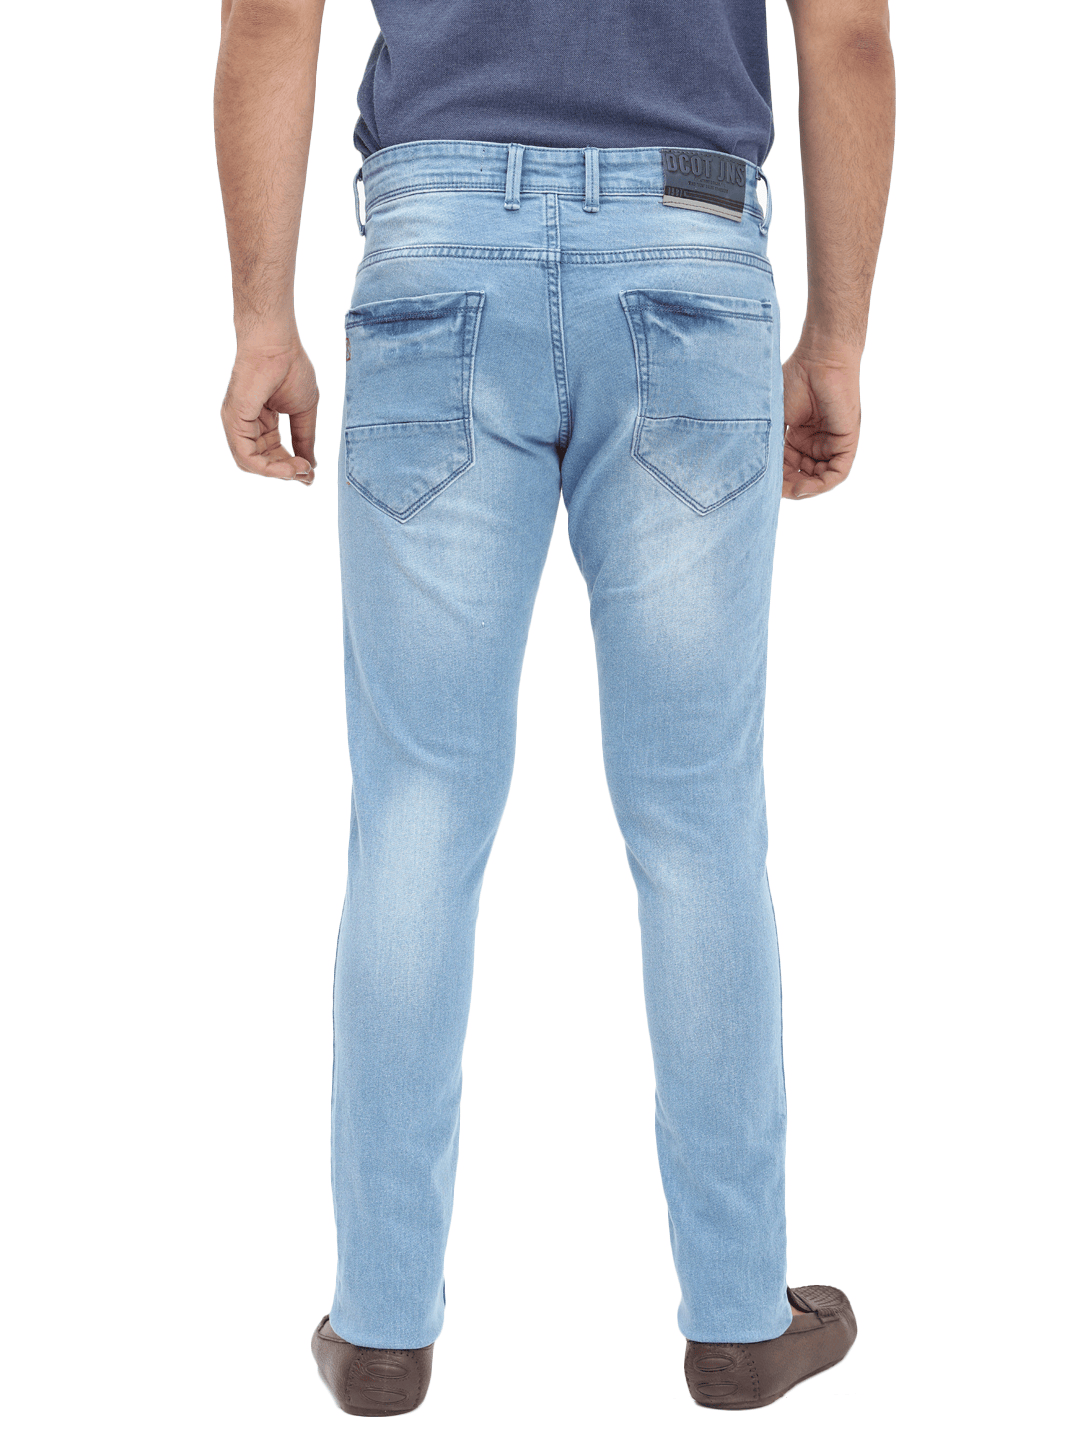 D'cot by Donear | D'cot by Donear Men's Blue Cotton Jeans 1